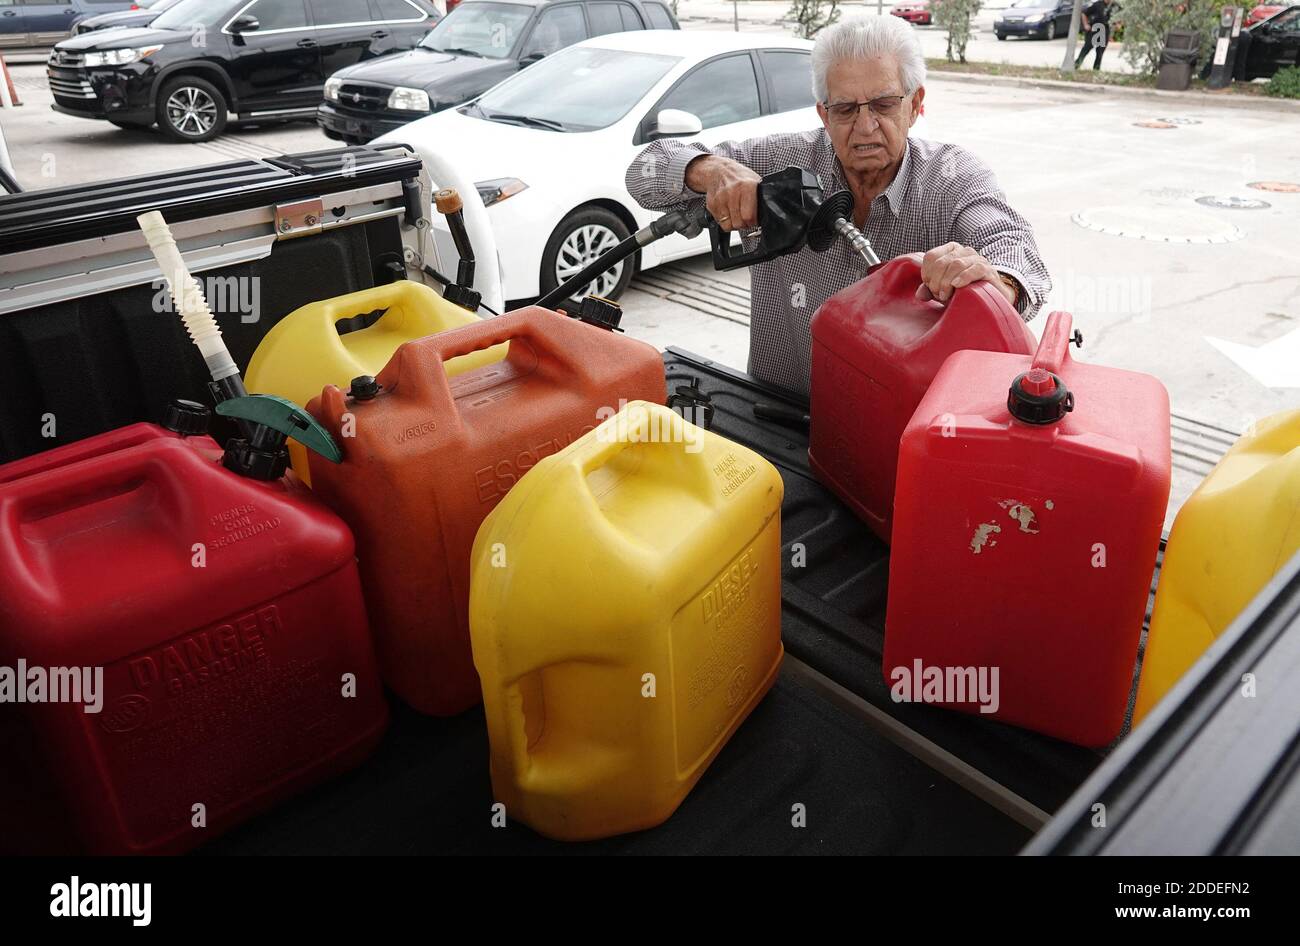 NO FILM, NO VIDEO, NO TV, NO DOCUMENTARY - Arael Medina of Dania Beach fills up gas containers, Thursday, August, 29, 2019 at the BJ's wholesale club in Fort Lauderdale. Photo by Joe Cavaretta/South Florida Sun Sentinel/TNS/ABACAPRESS.COM Stock Photo